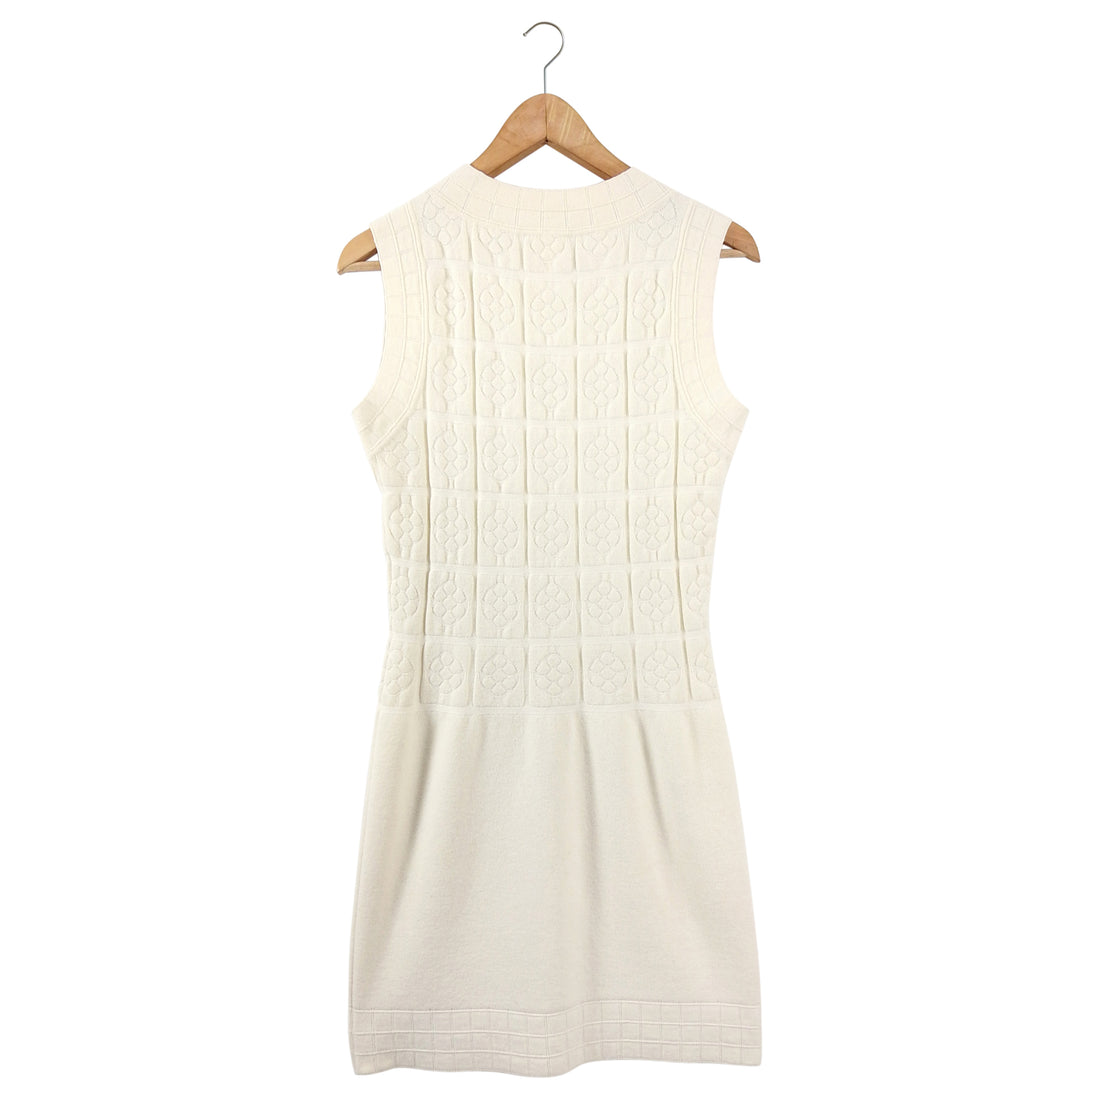 Chanel Ivory Textured Knit Sleeveless Dress - M